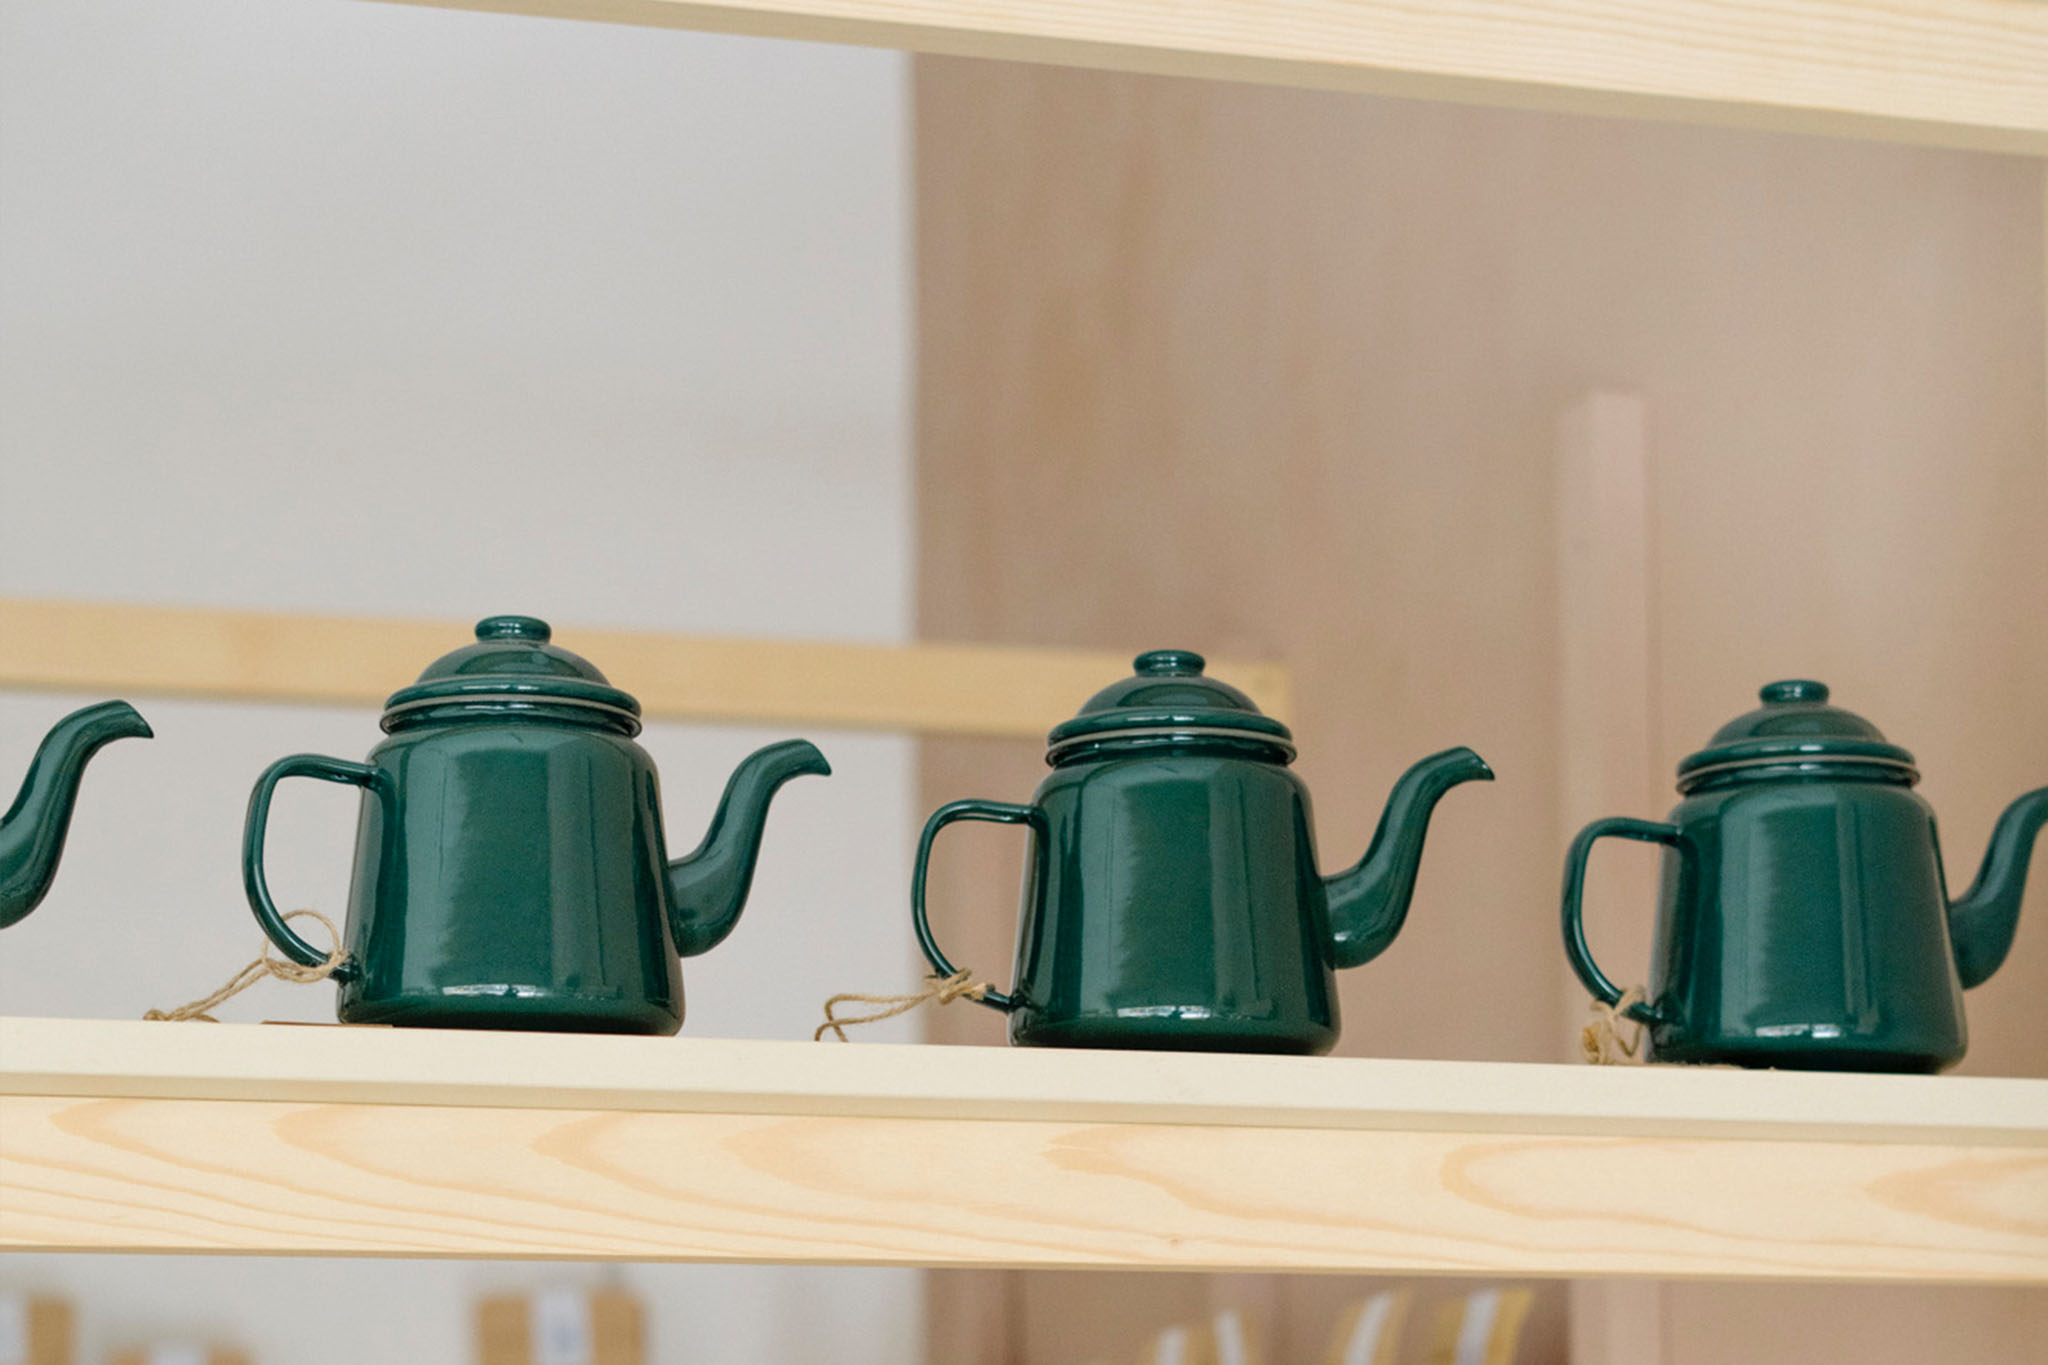 Enamel teapot from Falcon iconic British enamelware producer